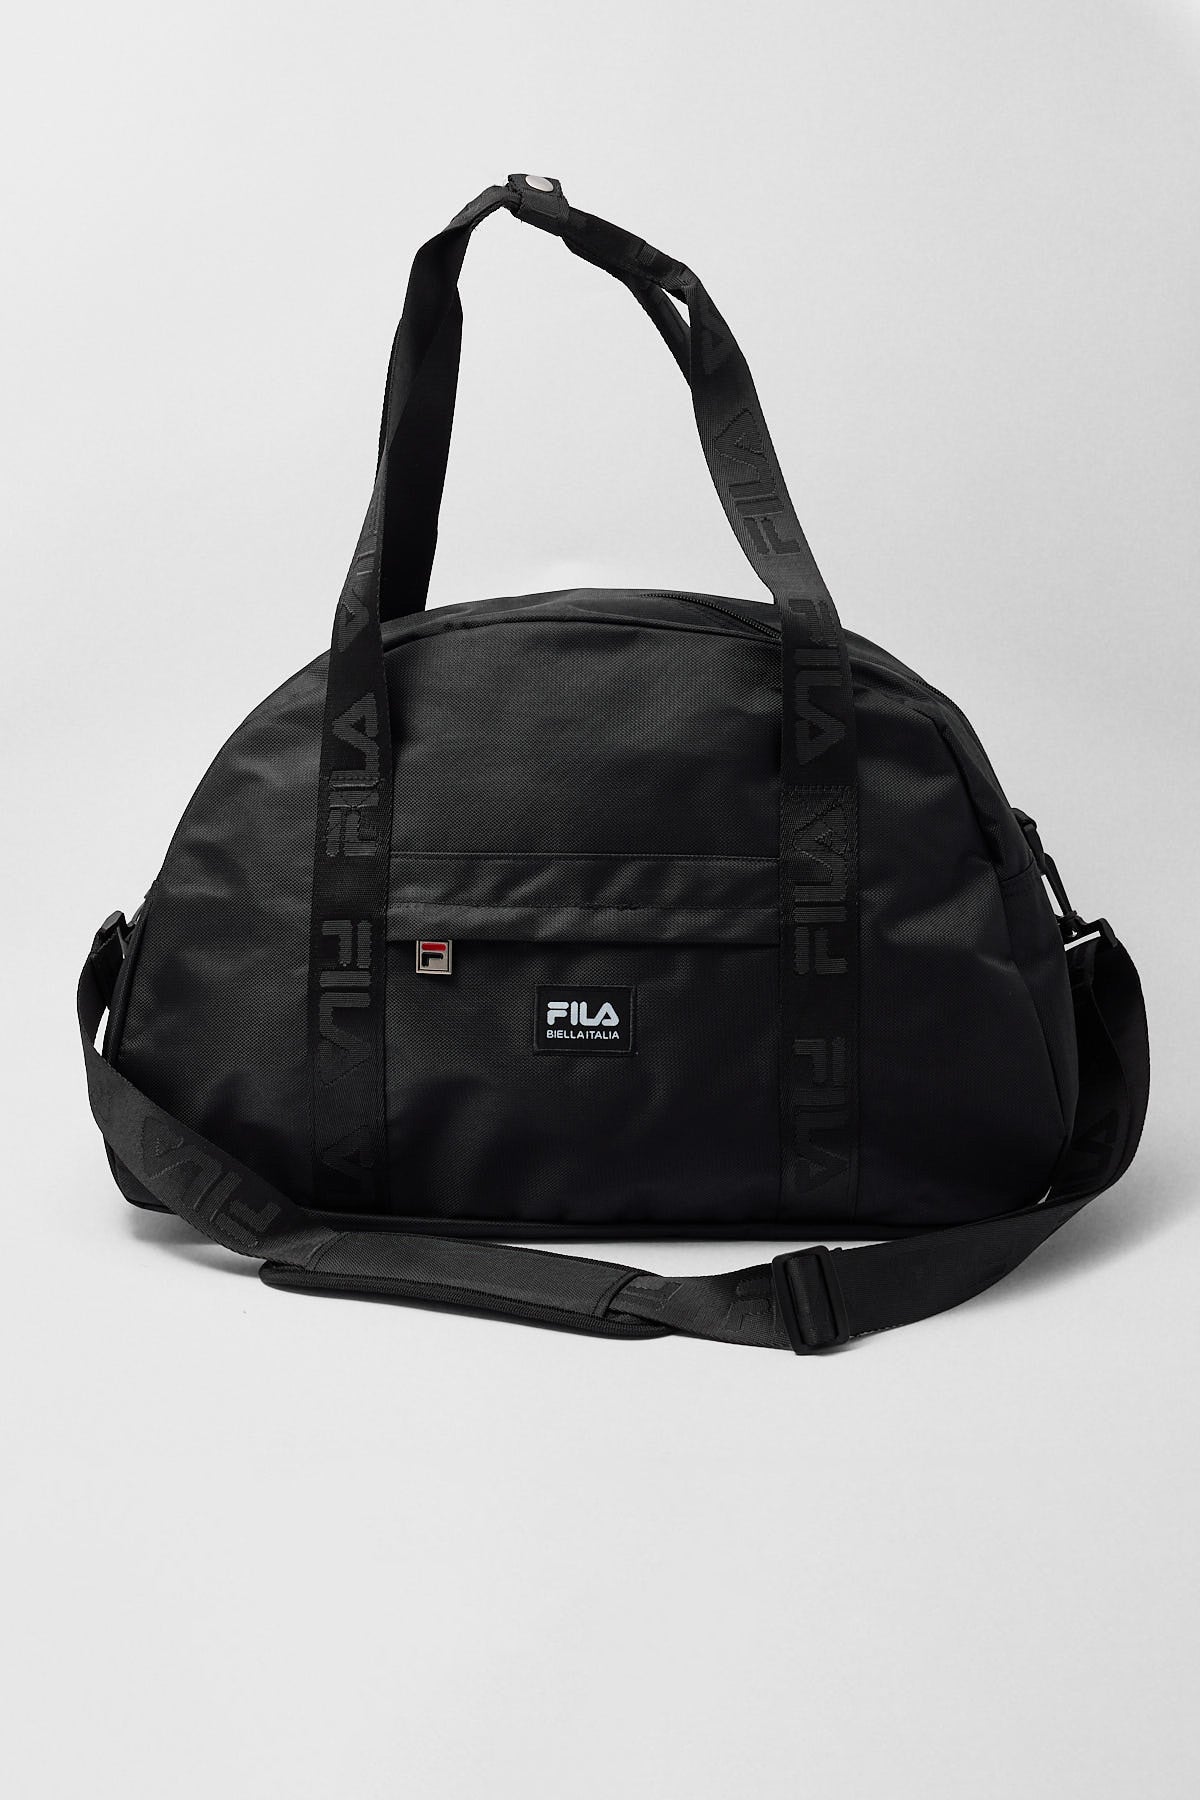 Fila Bowers Weekend Bag Black